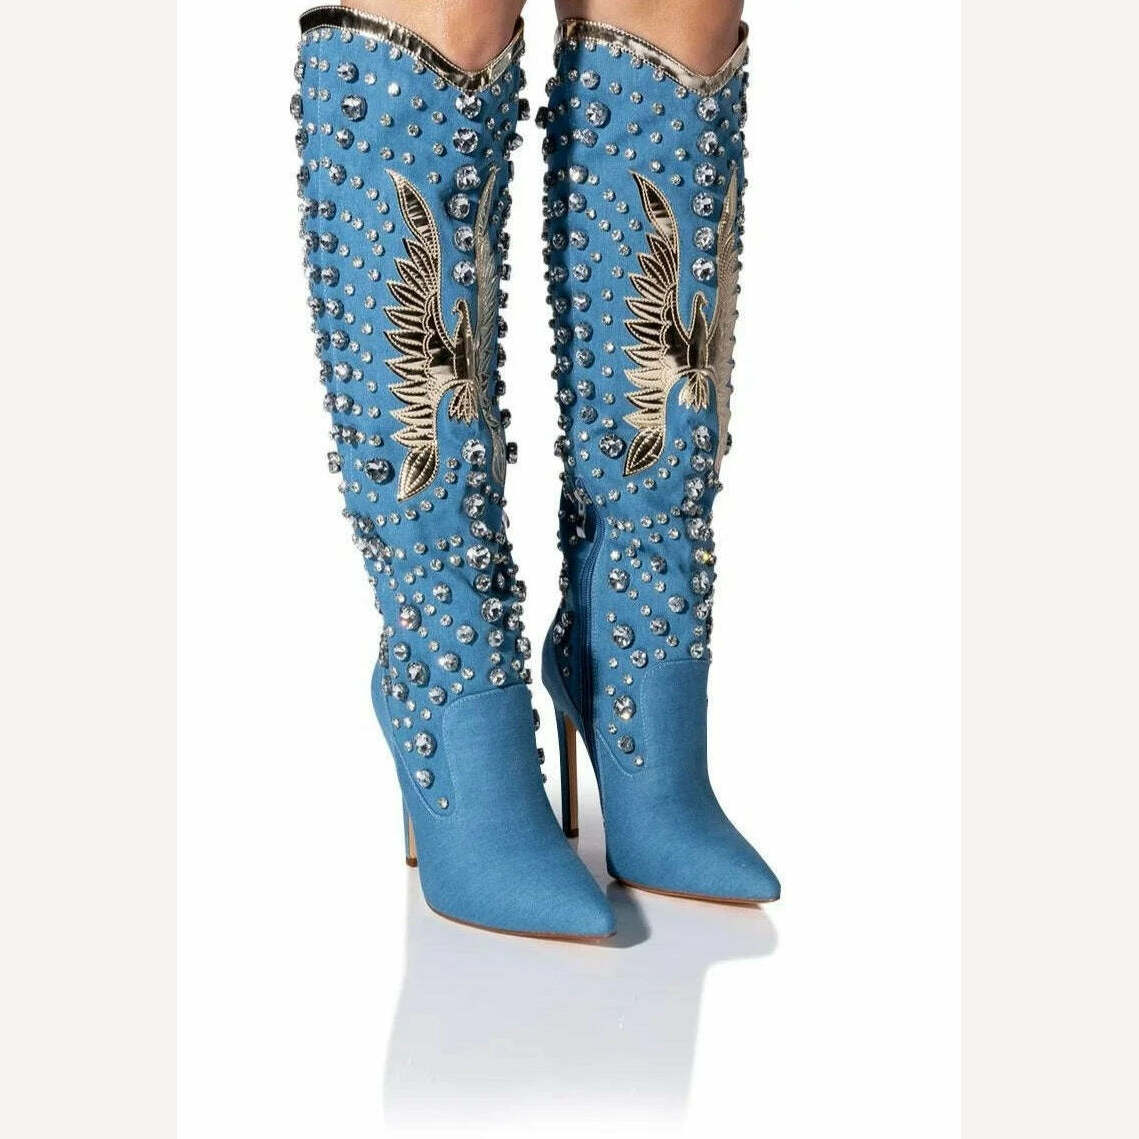 KIMLUD, Women Luxury Crystal Cowboy Boots Blue Denim Pointed Toe Glitter Knee High Boots High Heels Zipper Big Size Designer Shoes, KIMLUD Women's Clothes